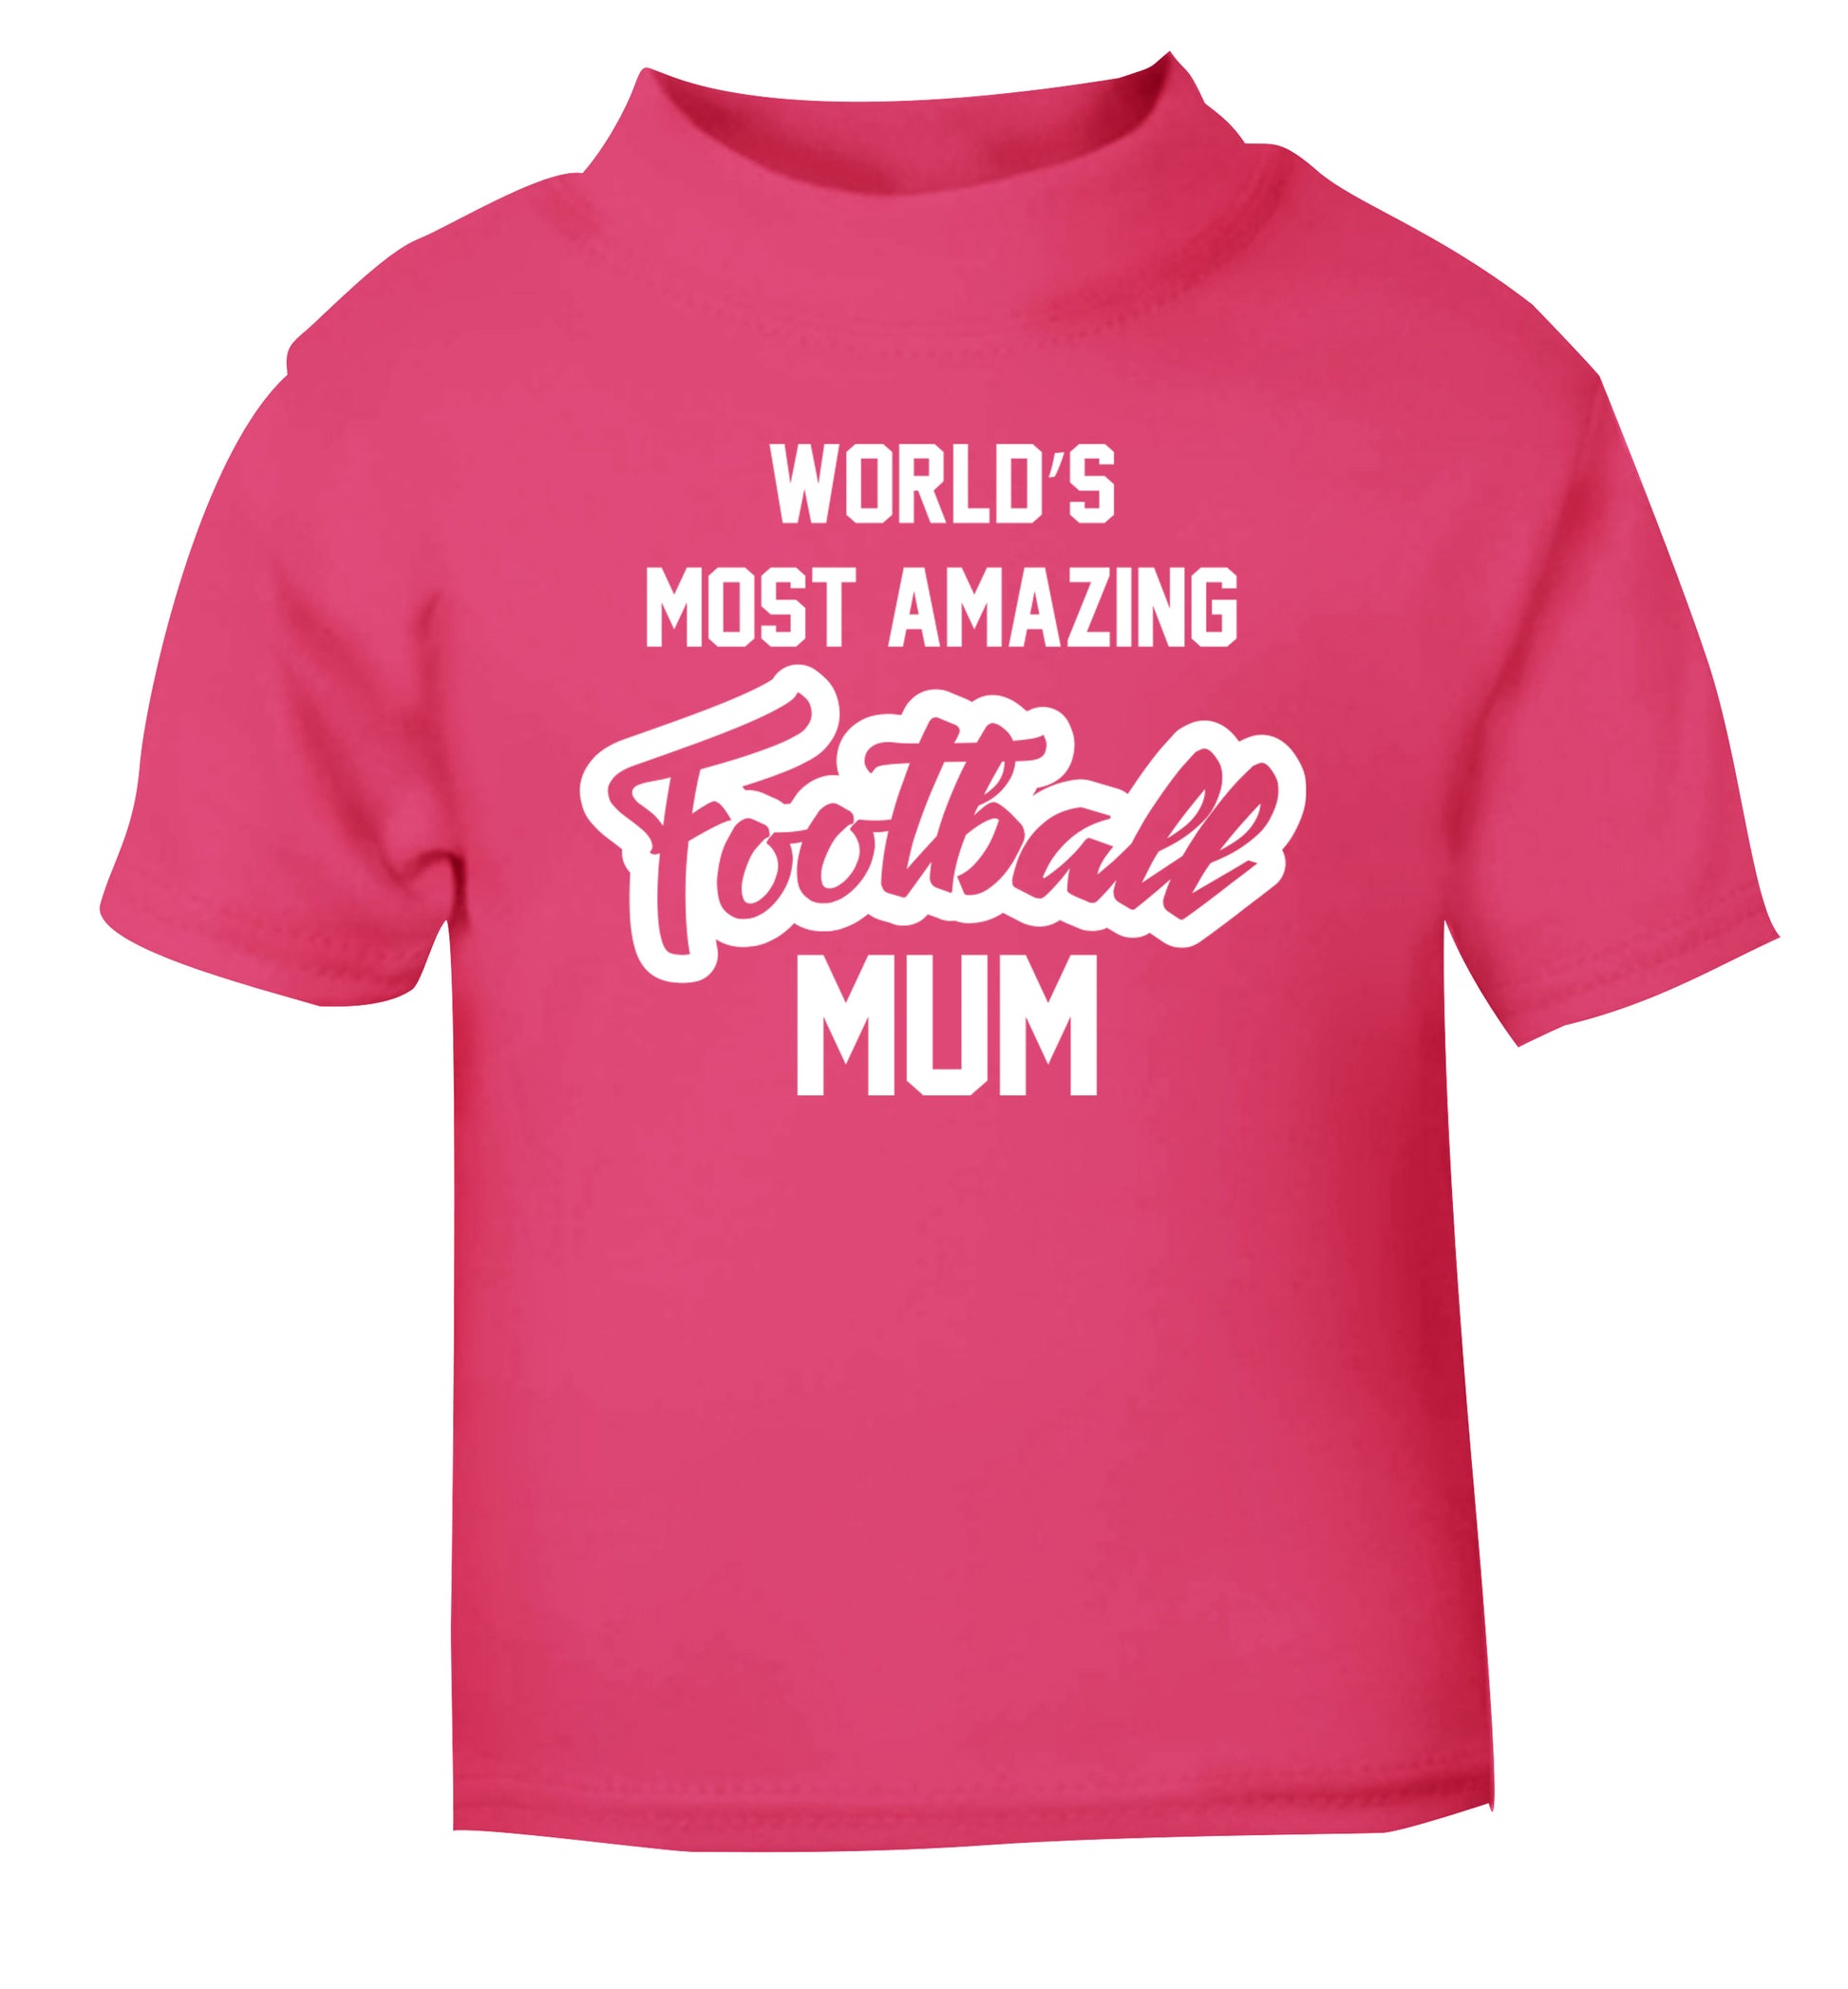 Worlds most amazing football mum pink Baby Toddler Tshirt 2 Years